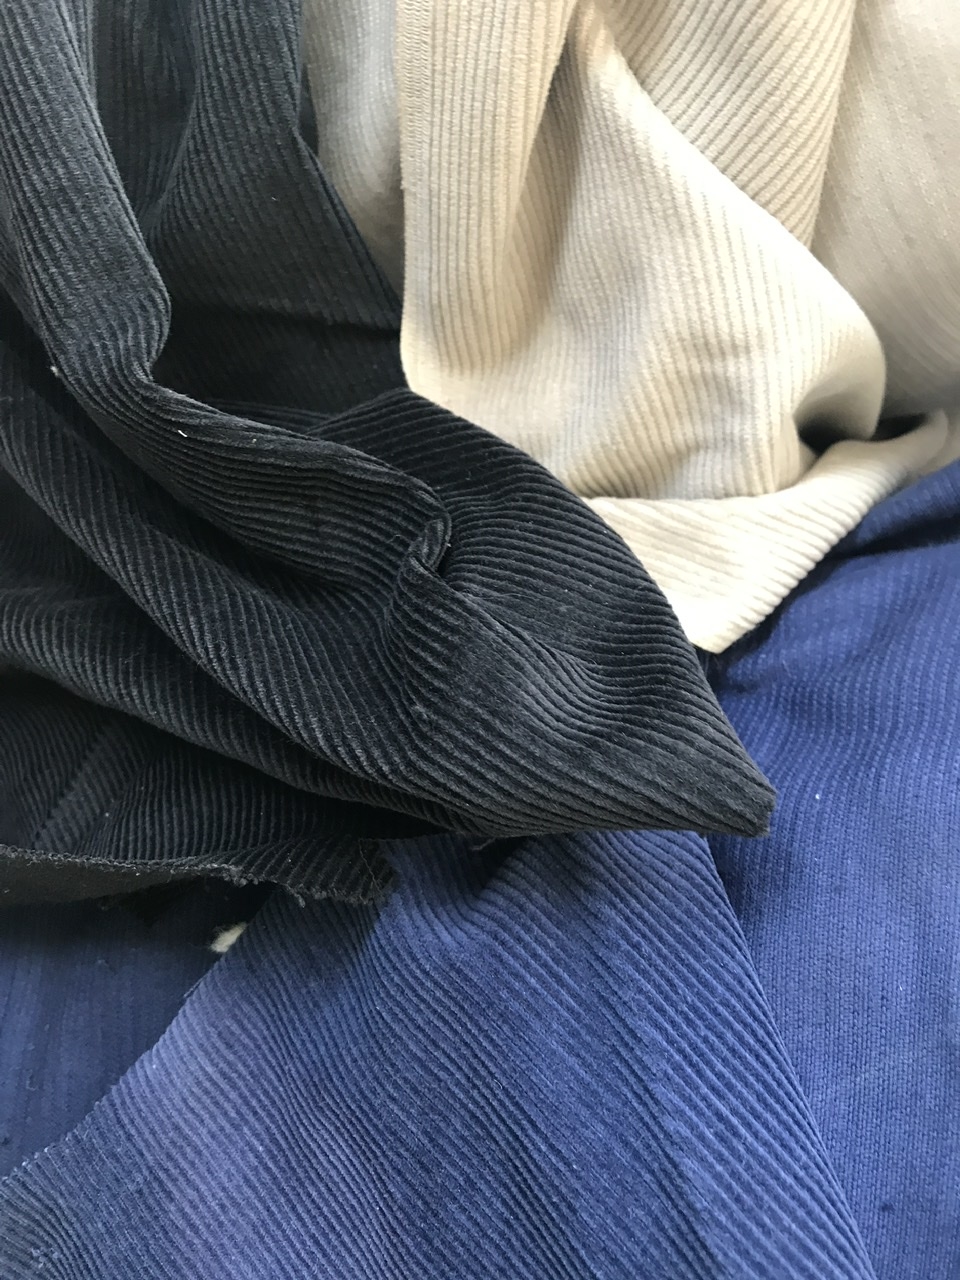 blue corduroy fabric